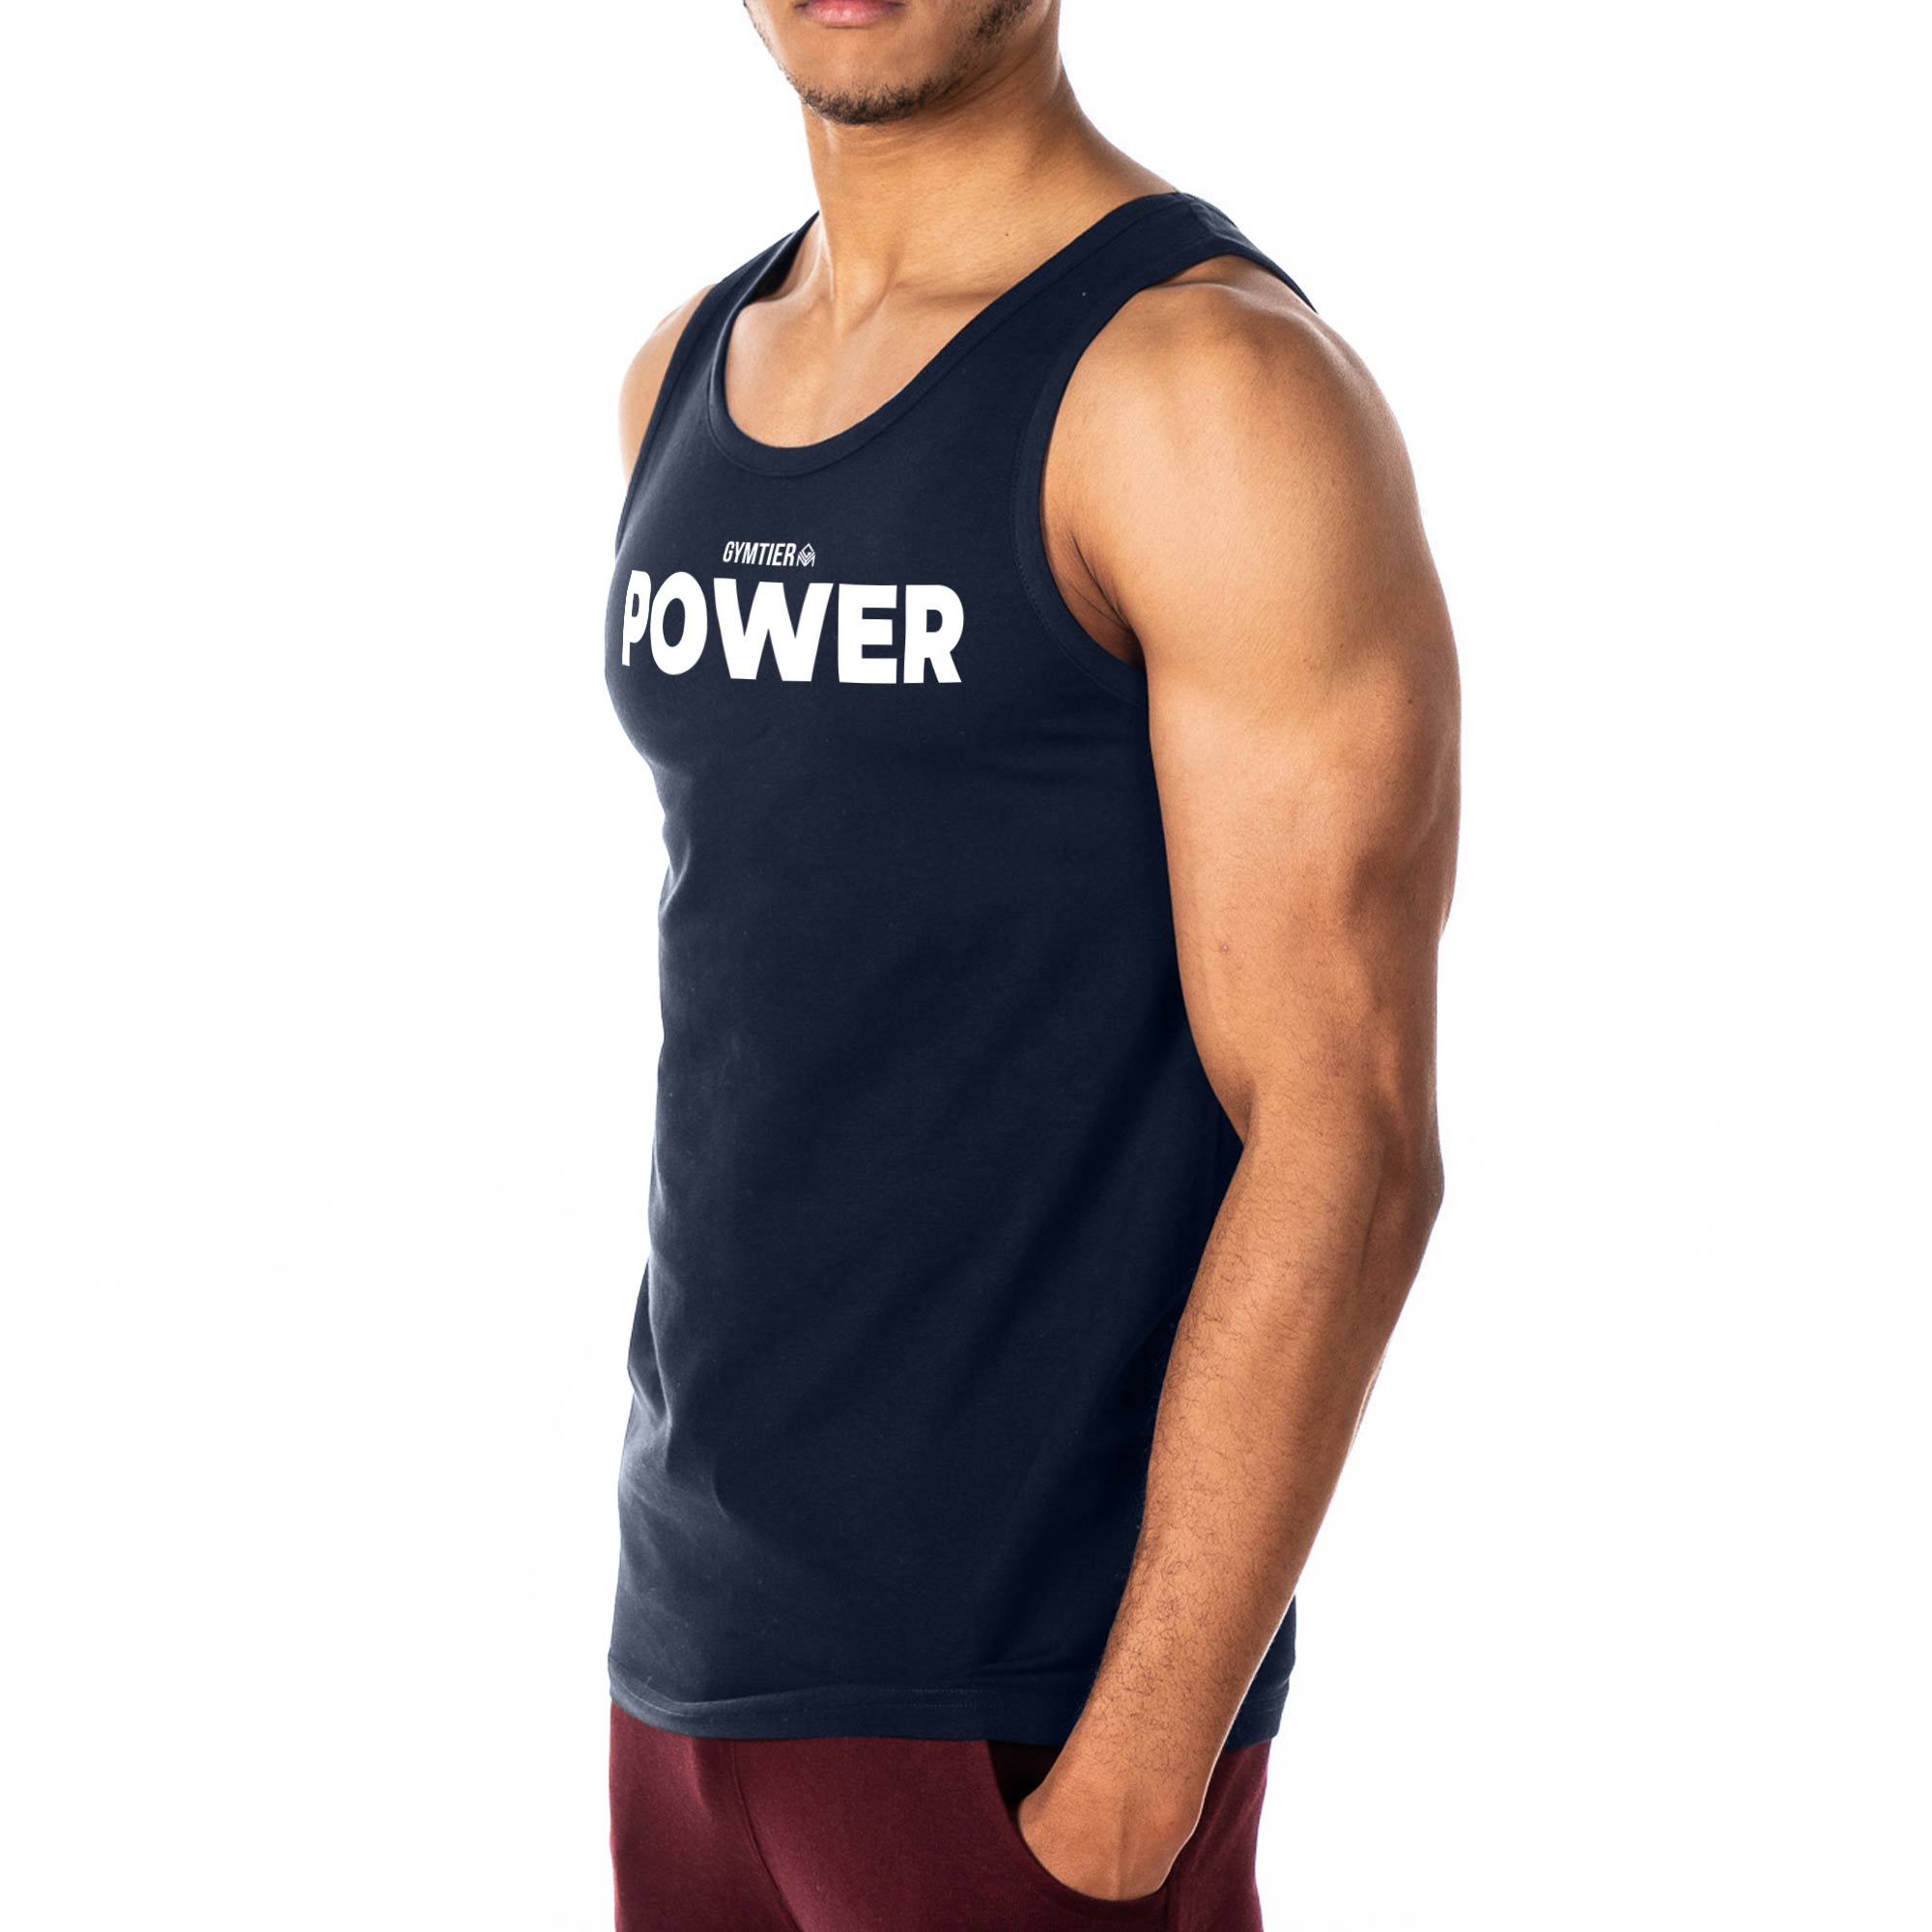 GYMTIER Power Gym Vest